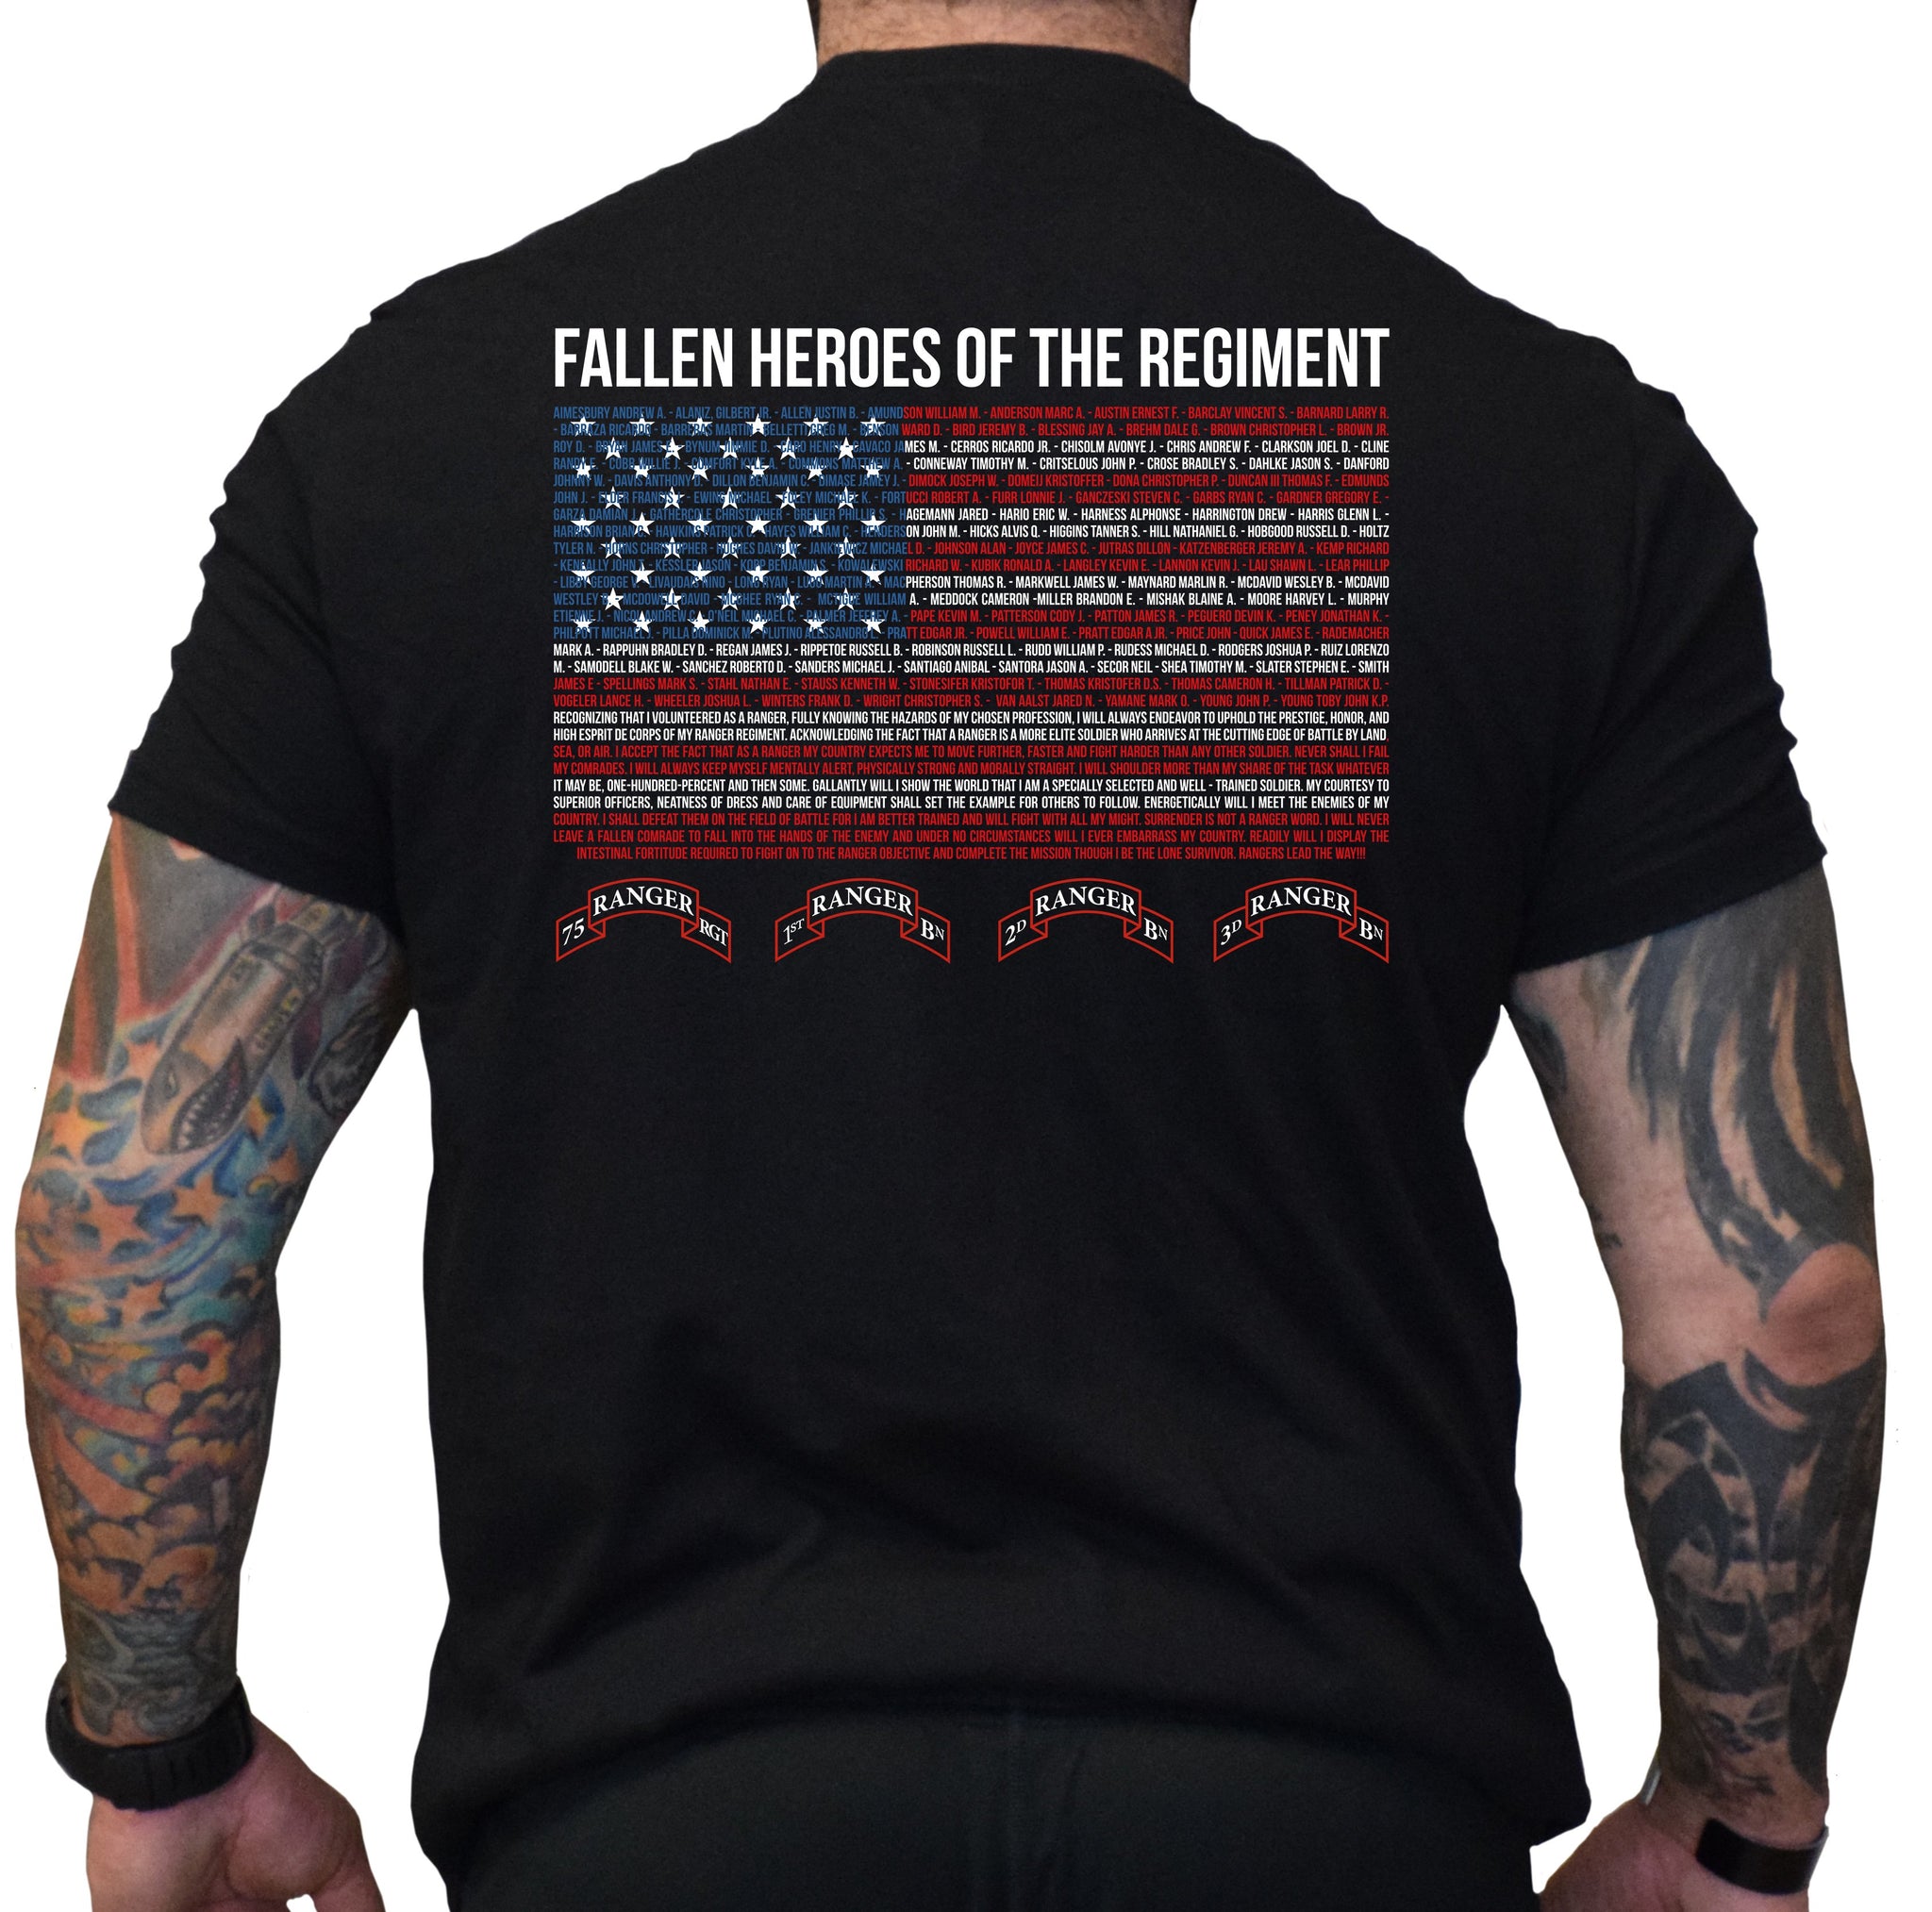 army ranger tee shirts